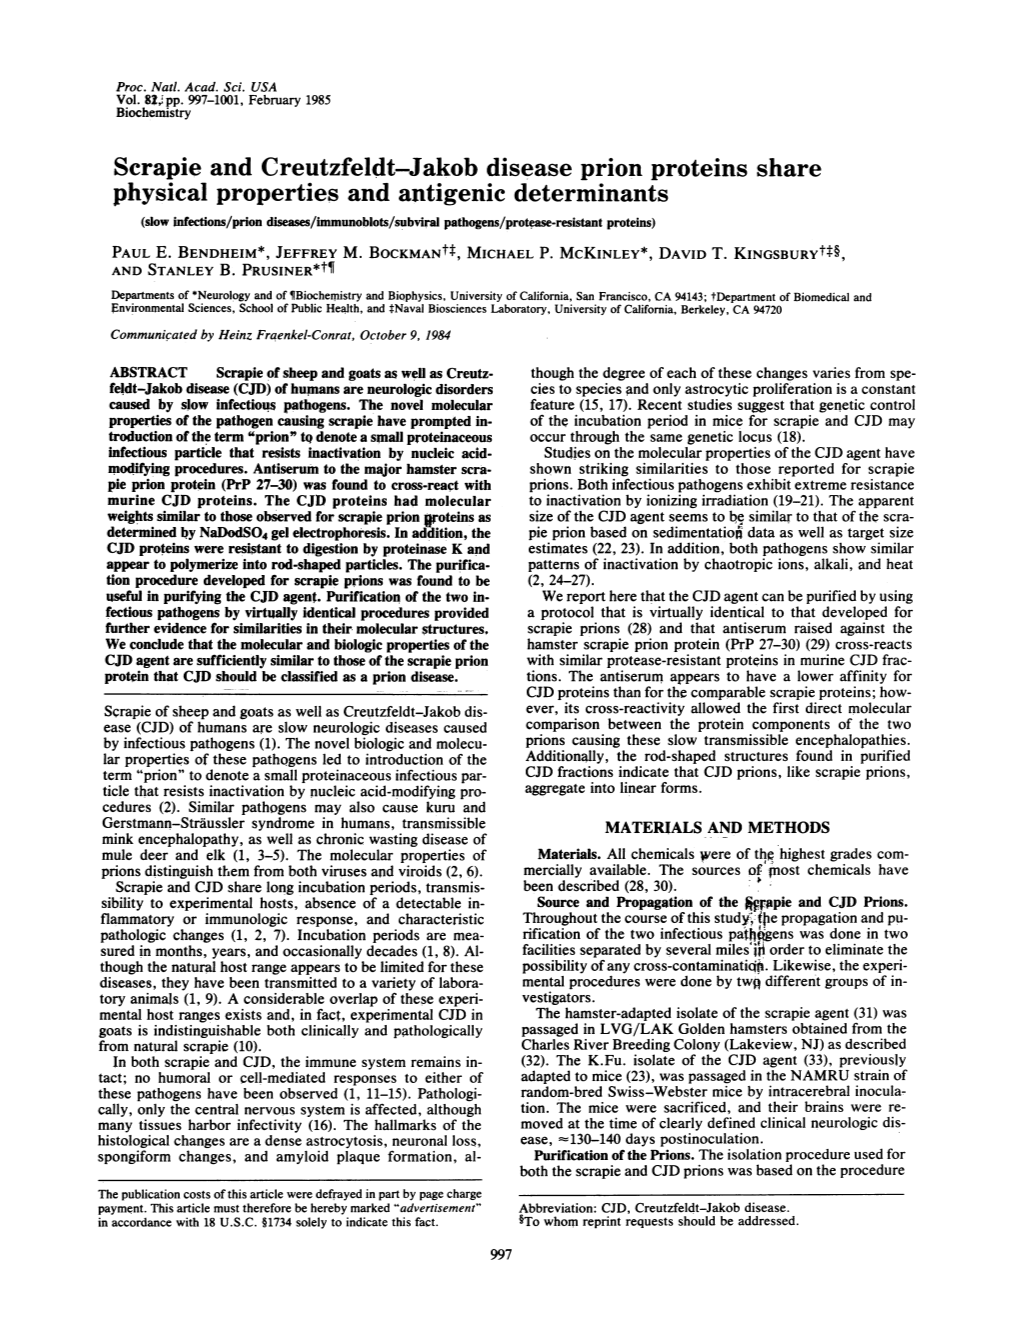 Scrapie and Creutzfeldt-Jakob Disease Prion Proteins Share